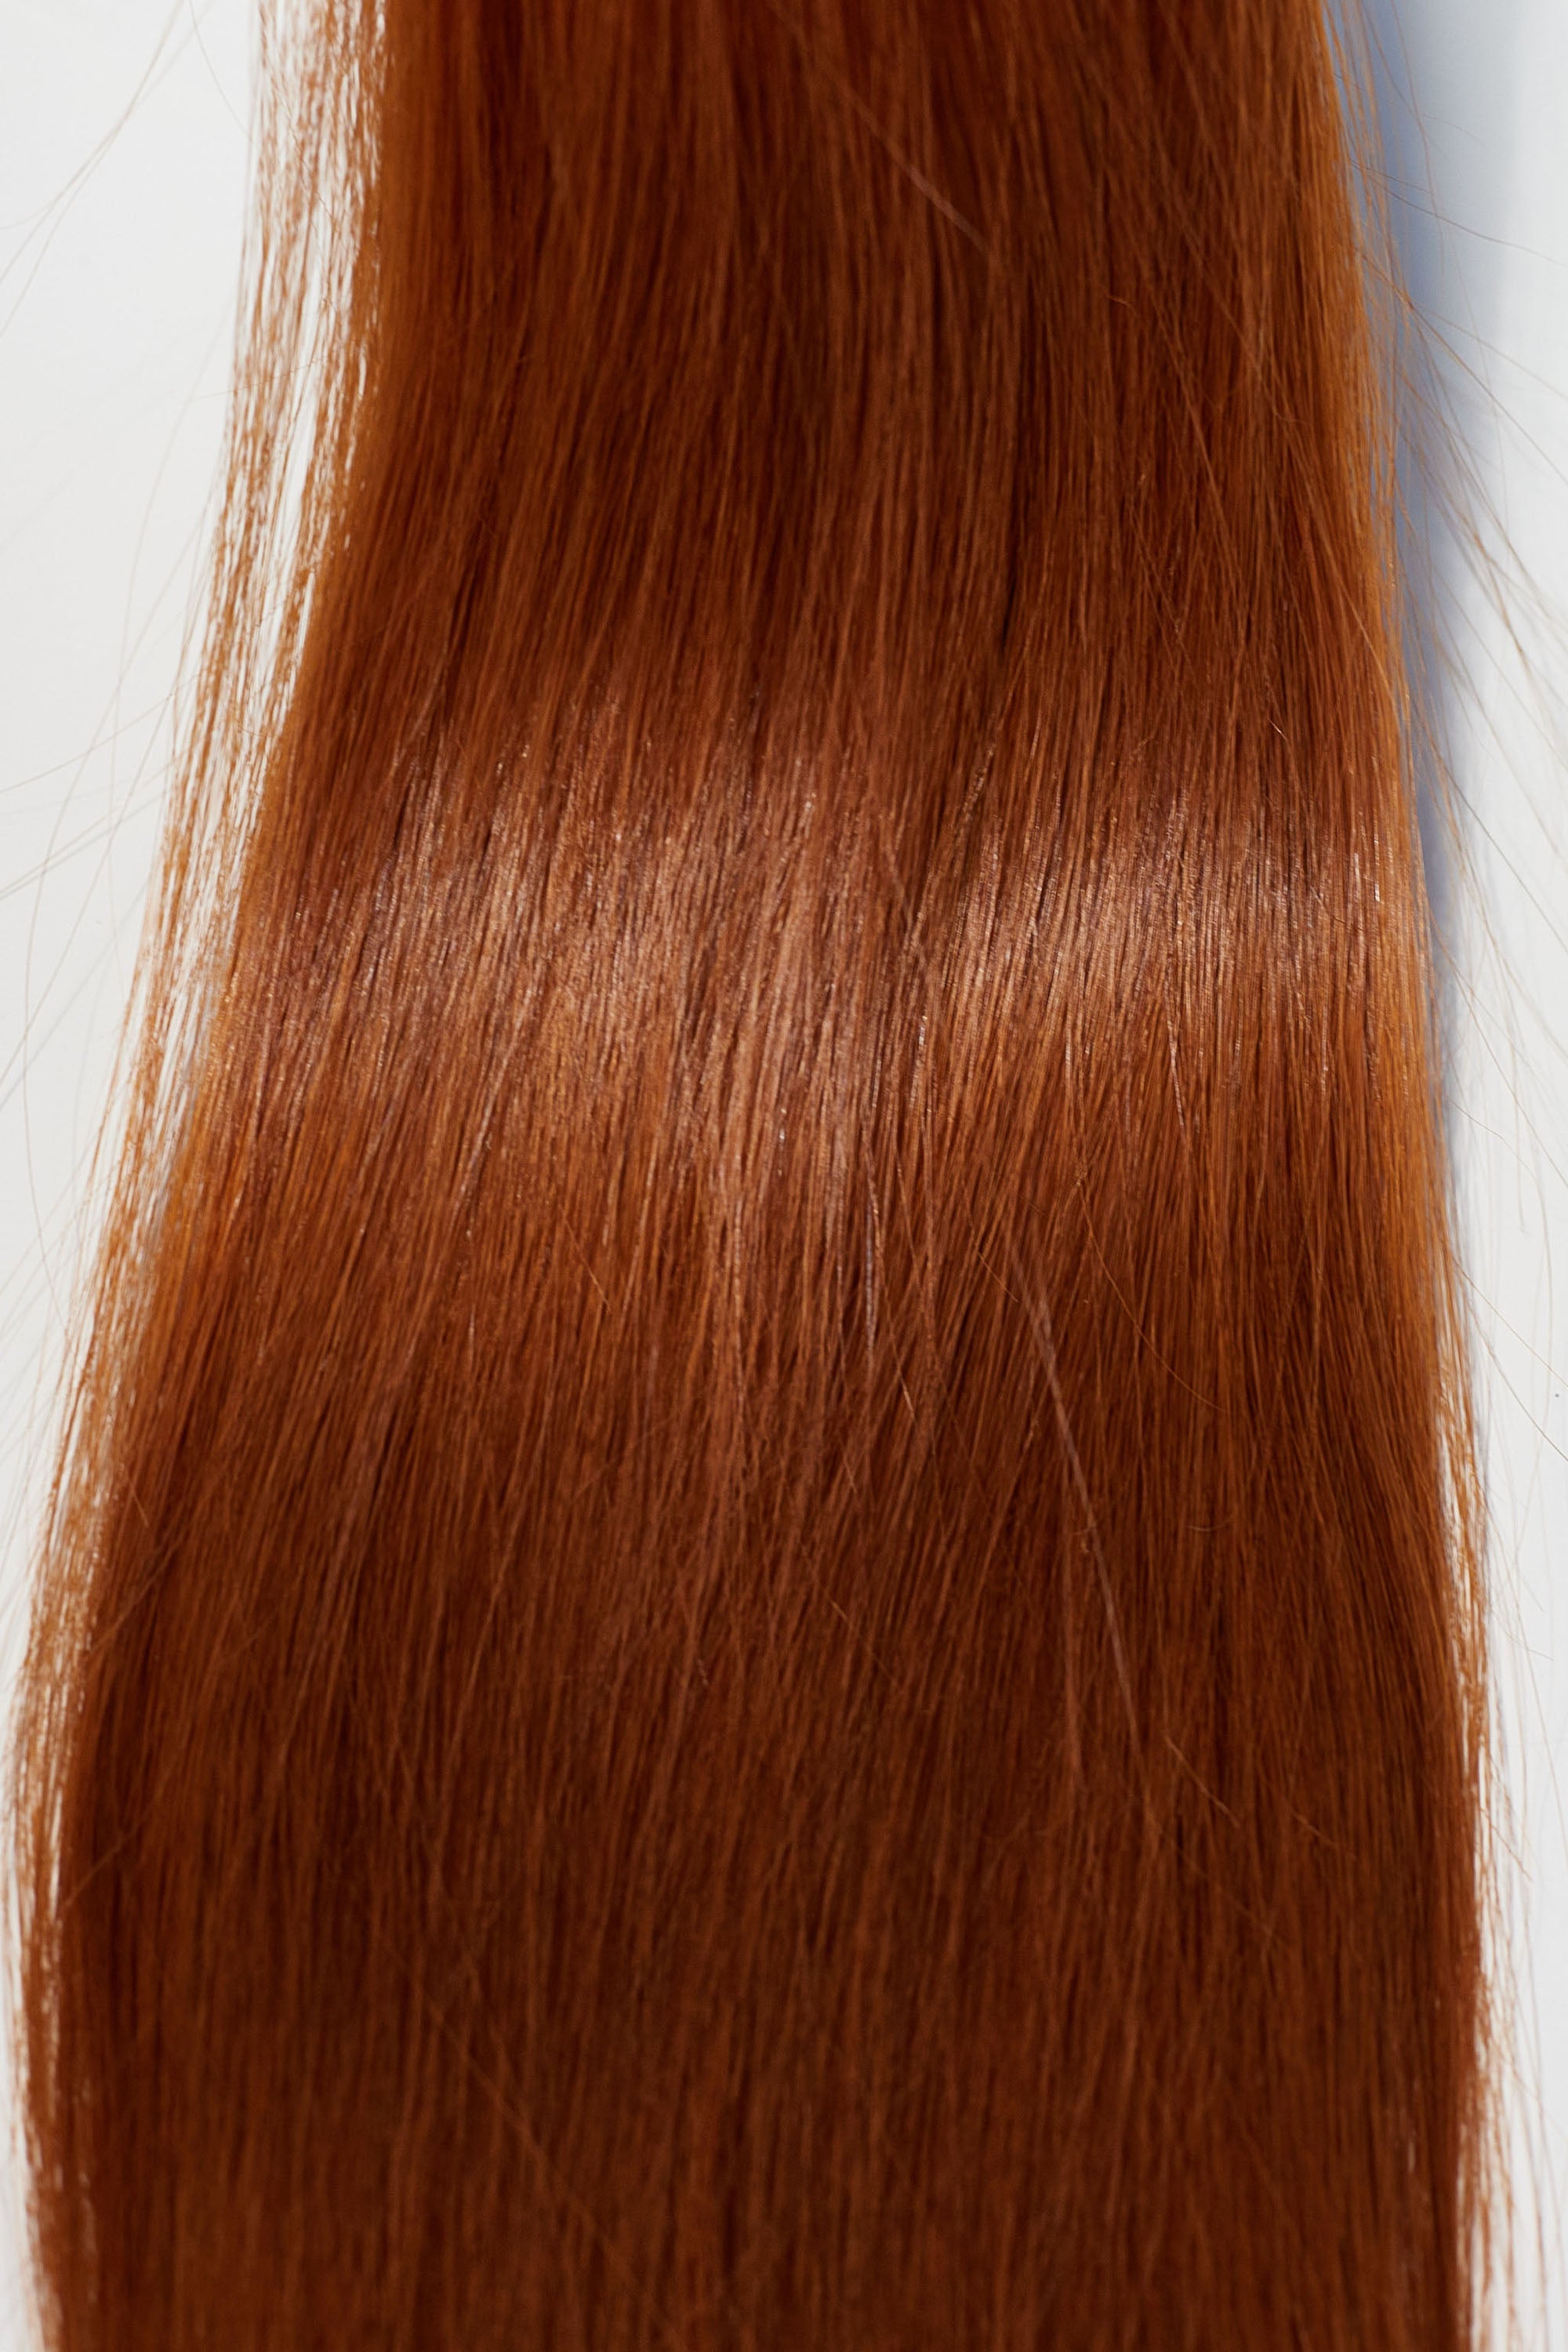 Behair professional Keratin Tip "Premium" 18" (45cm) Natural Straight Brilliant Copper #130 - 25g (Standart - 0.7g each pcs) hair extensions